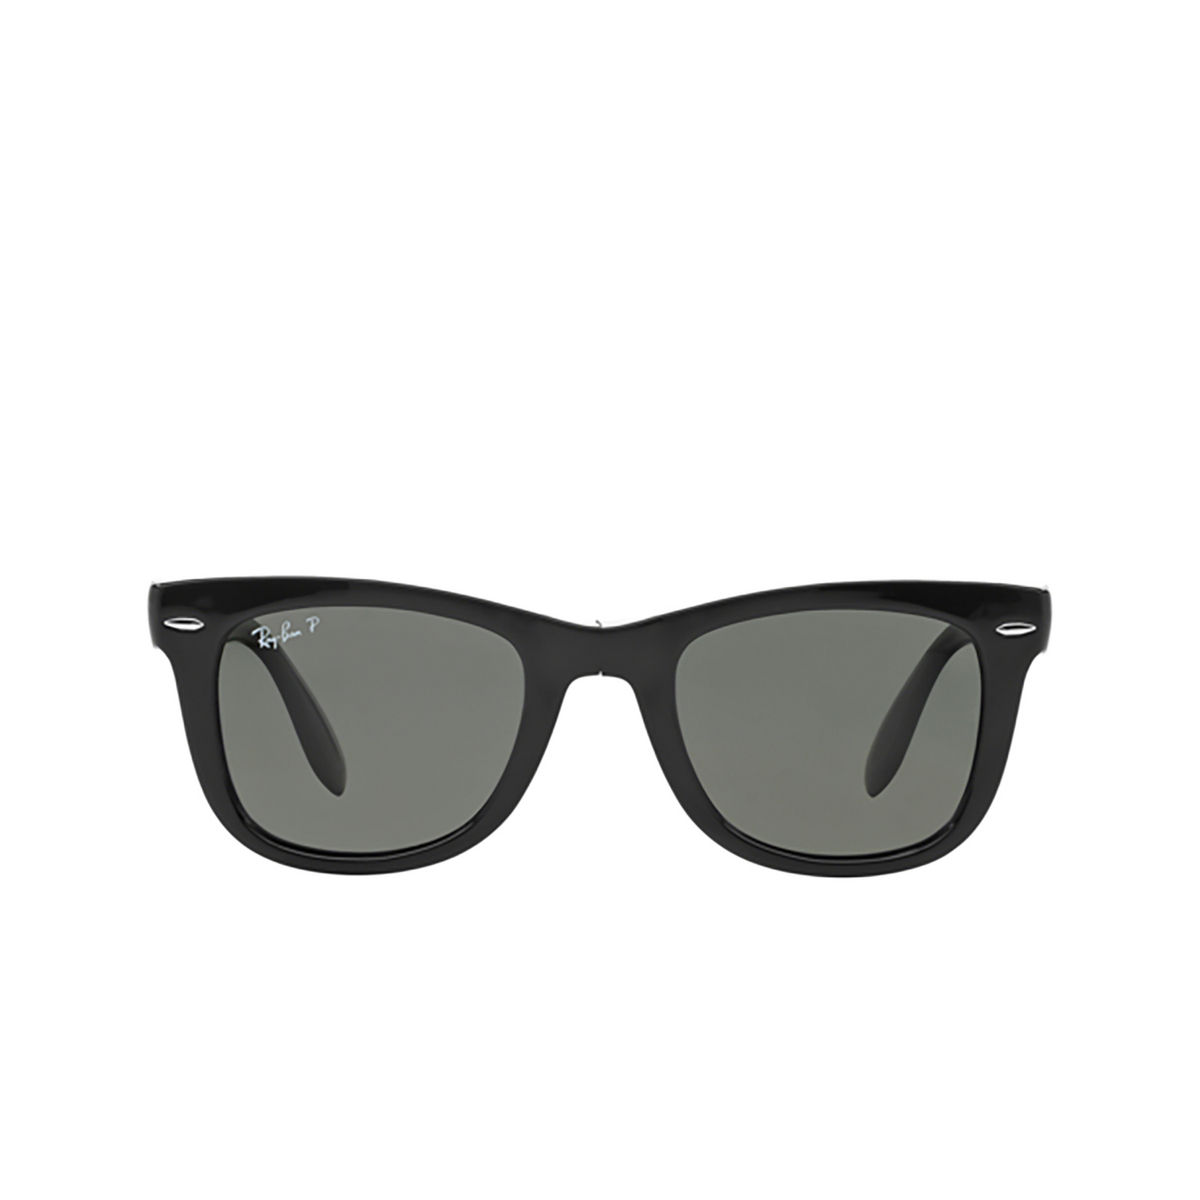 Ray-Ban FOLDING WAYFARER Sunglasses 601/58 BLACK - front view